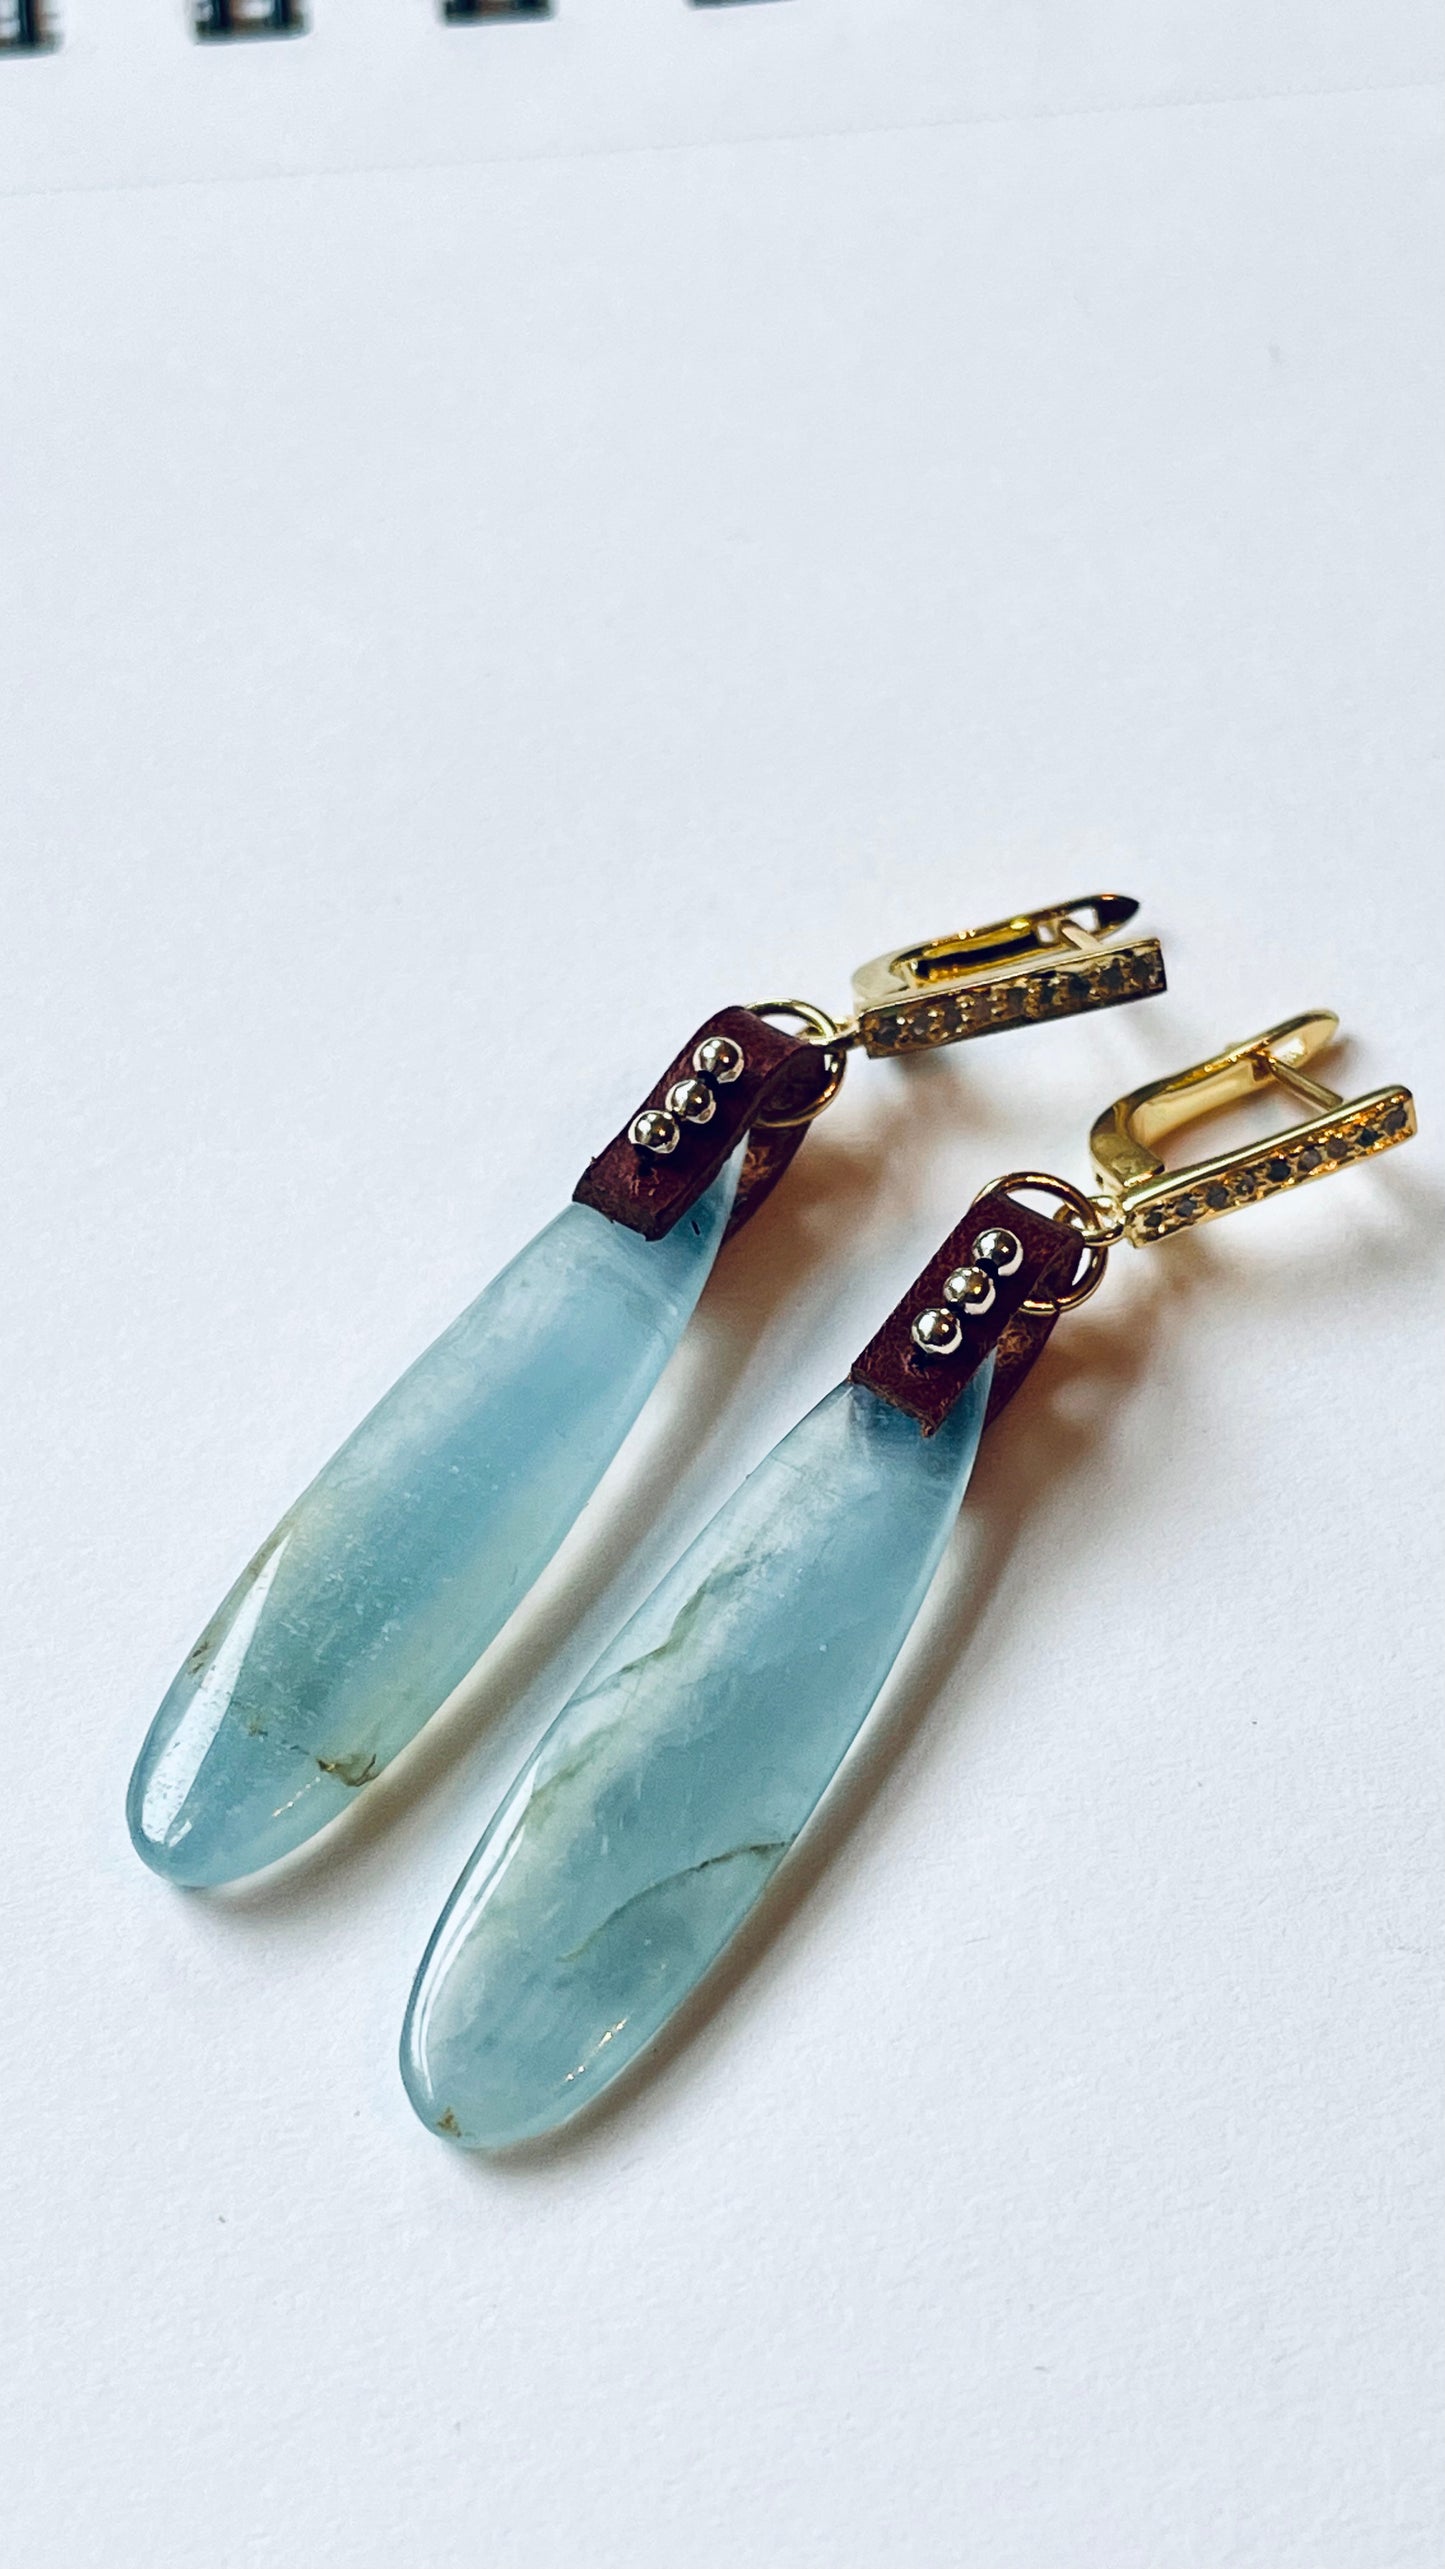 Aqua Blue Calcite Teardrop Earrings in Gold Vermeil with Pave-Set Diamonds OOAK (one of a kind)